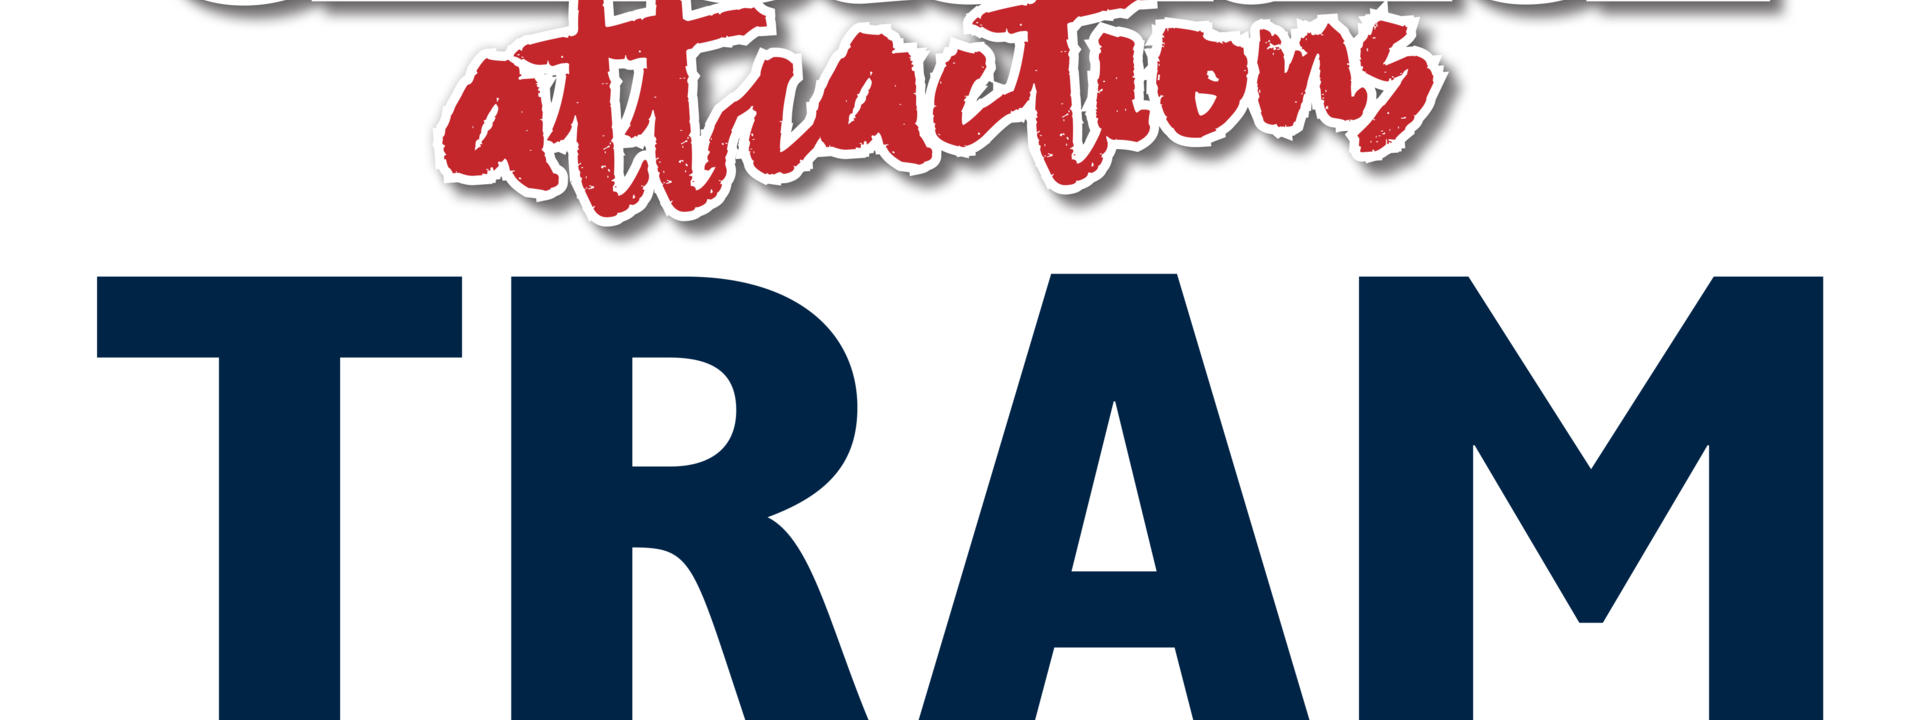 CHC Attractions Tram All Day Pass logo.jpg